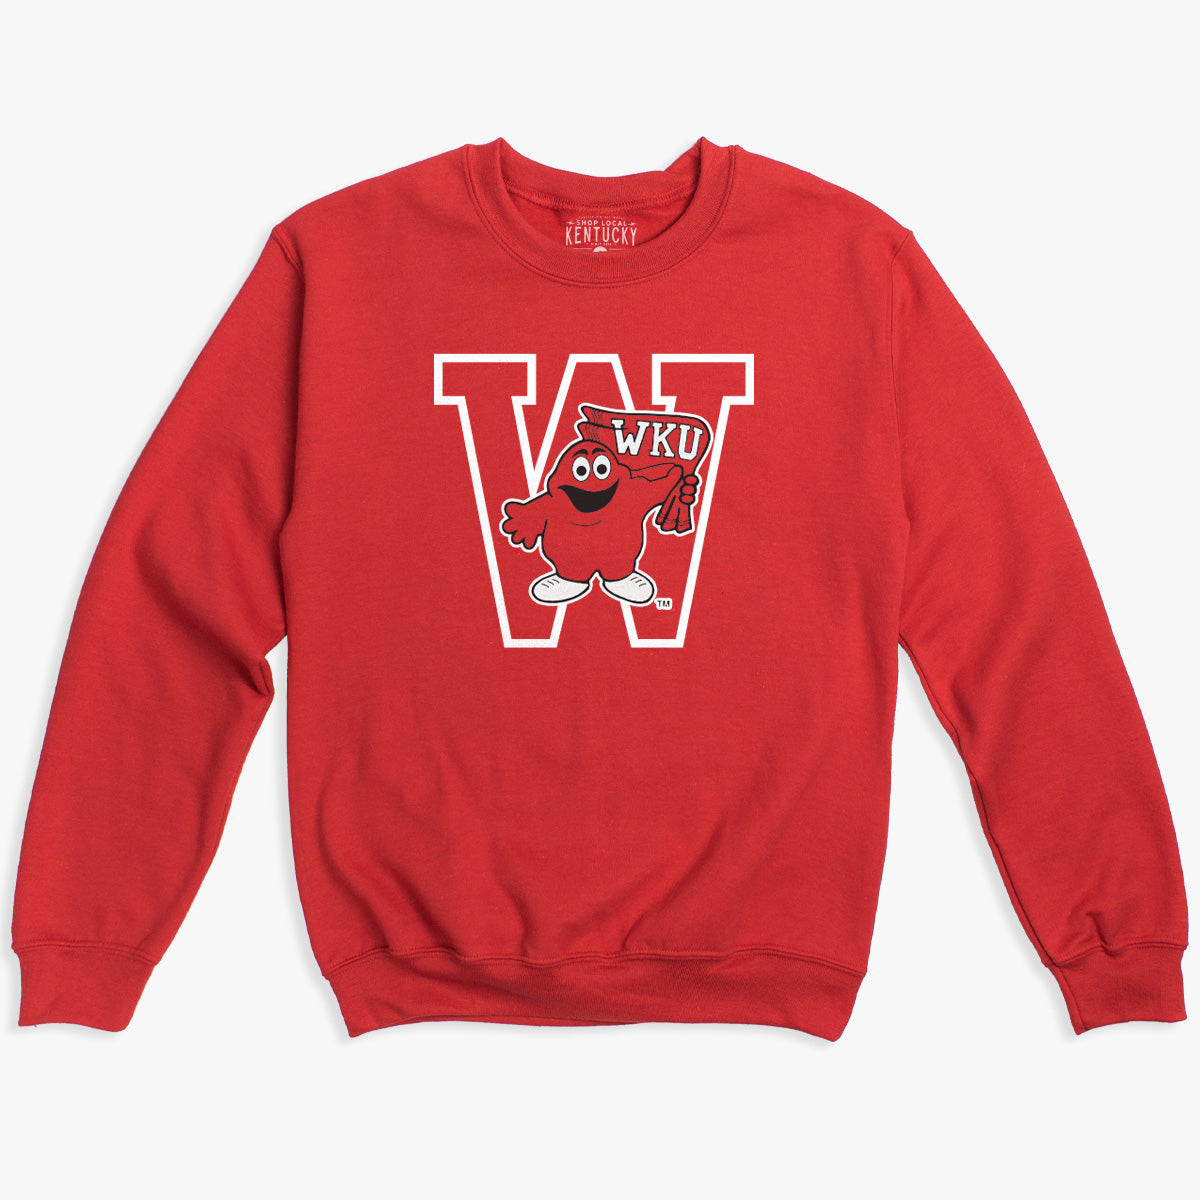 HappyNewVintageShop Louisville Sweatshirt: Louisville Kentucky Crewneck / College Style Sweatshirt / Vintage Inspired Sweater